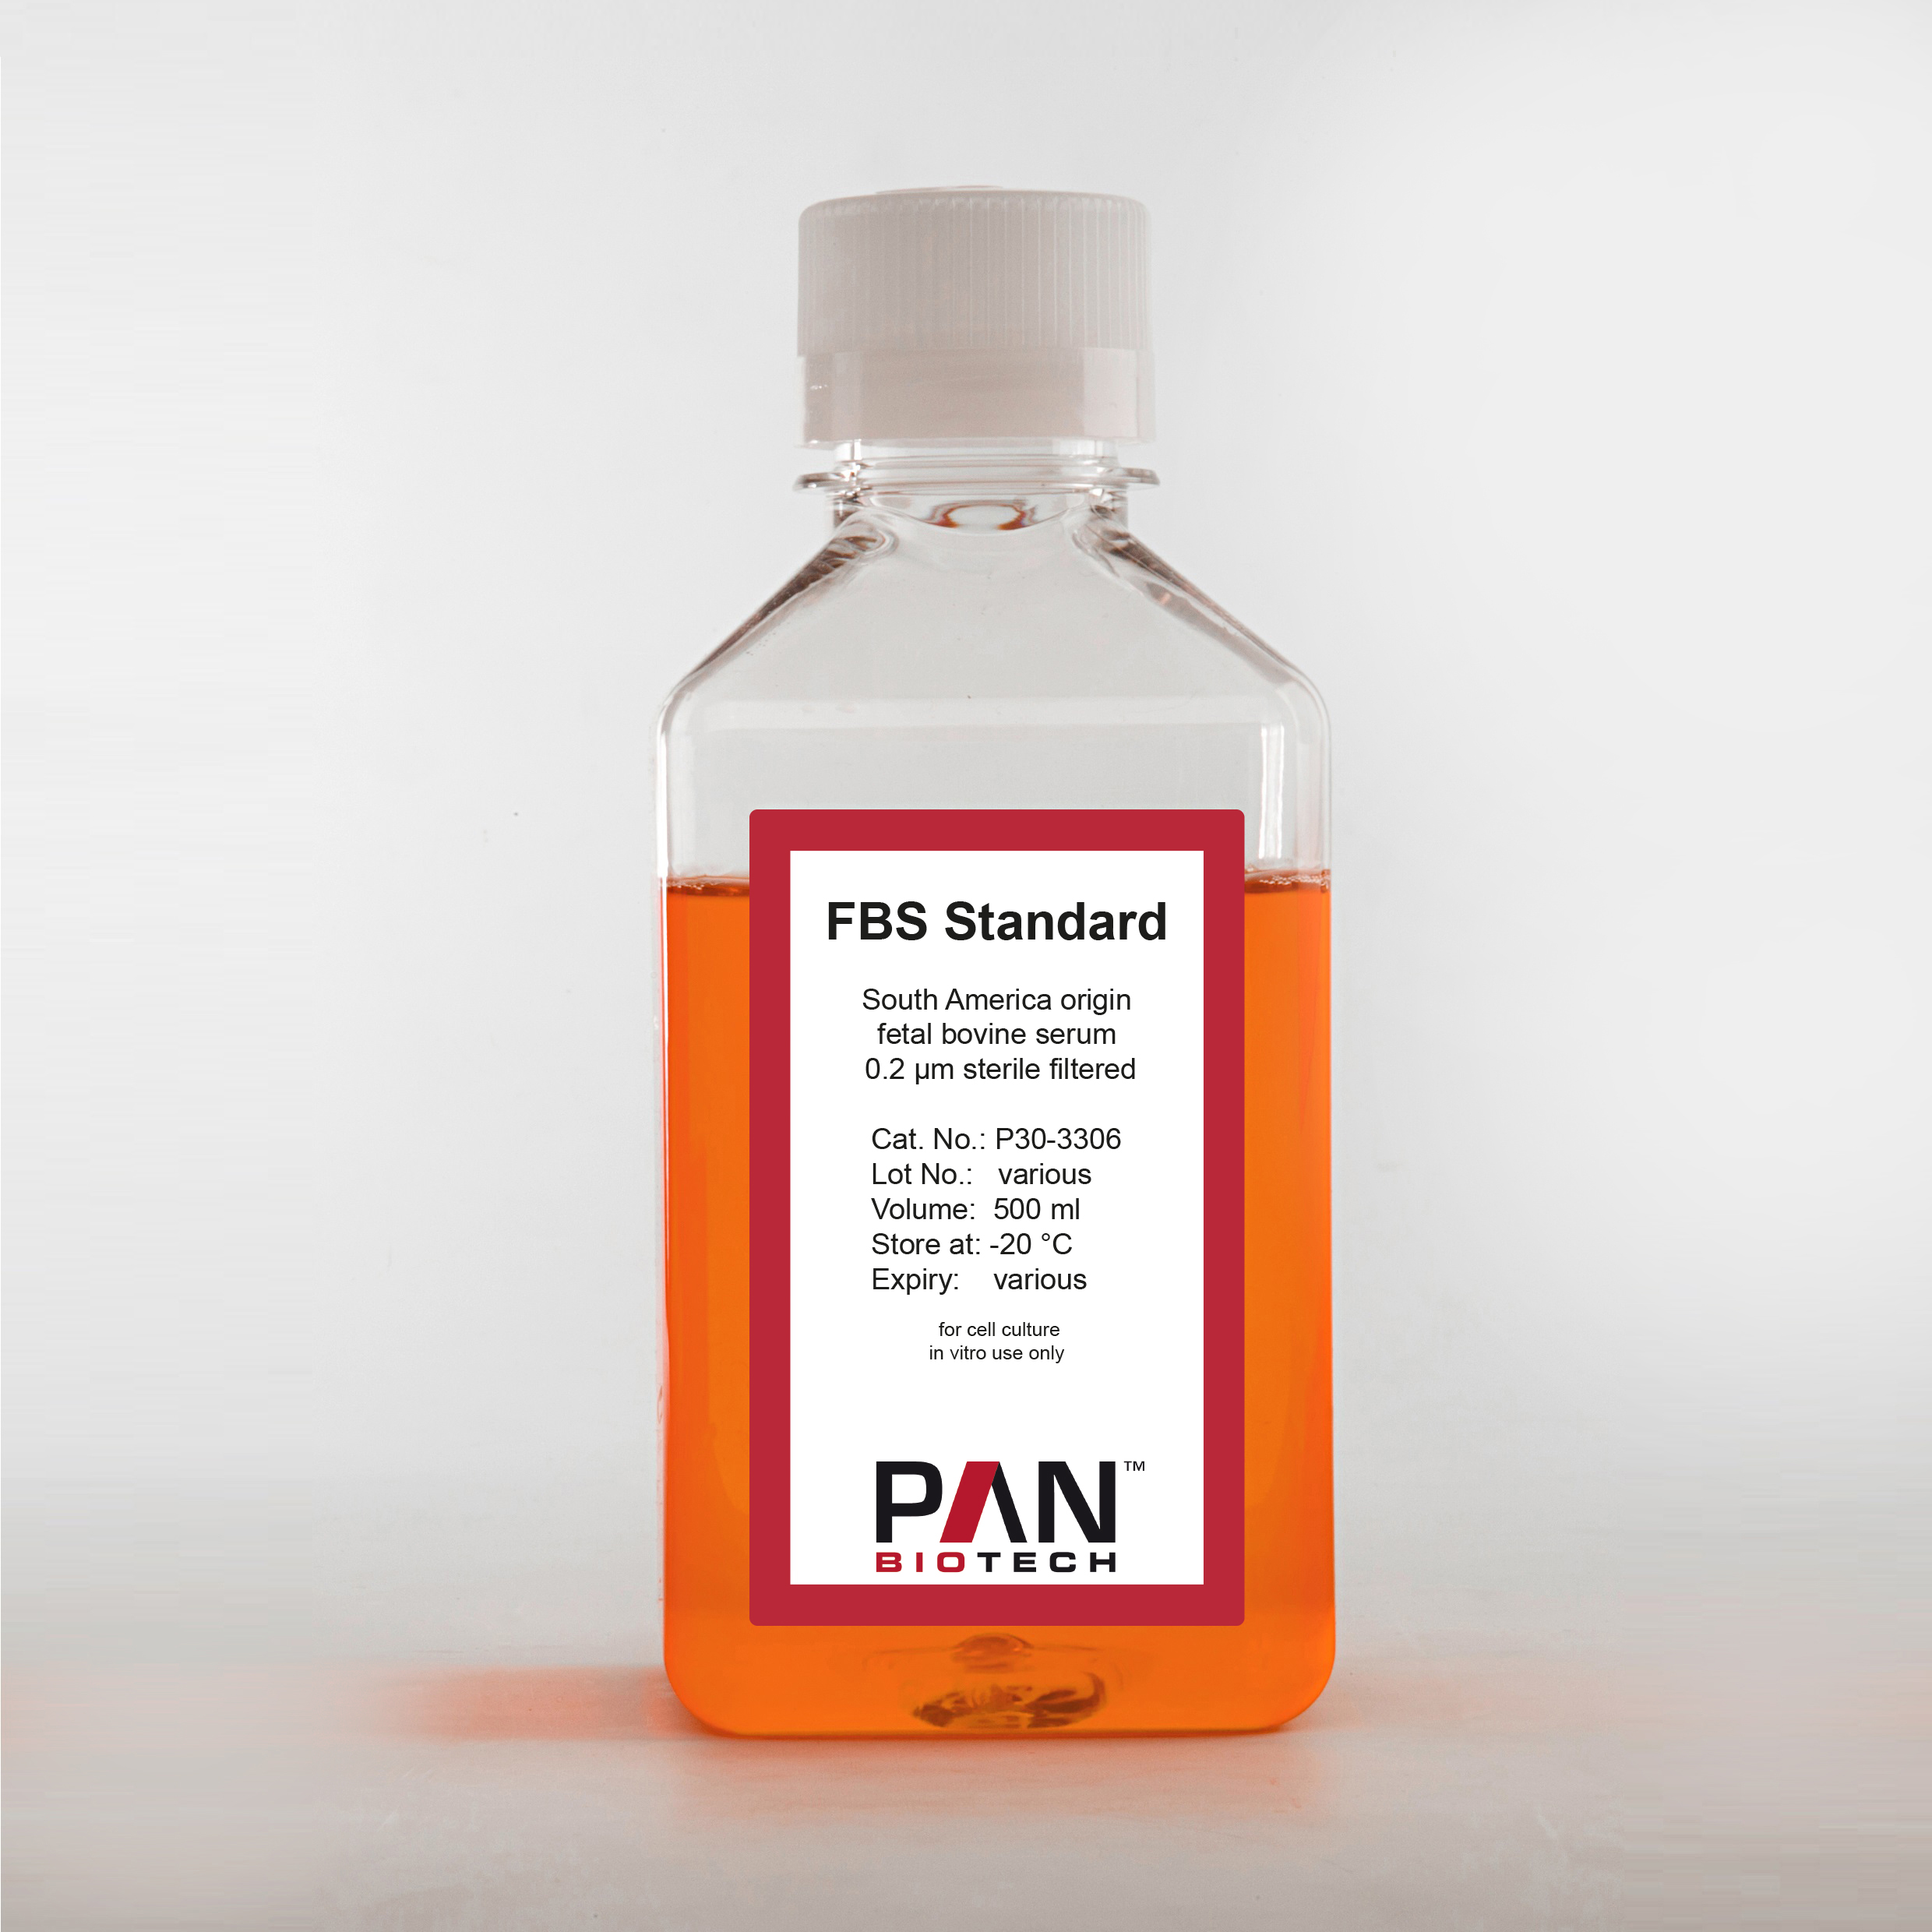 FBS Standard, South America origin, fetal bovine serum, 0.2 µm sterile filtered